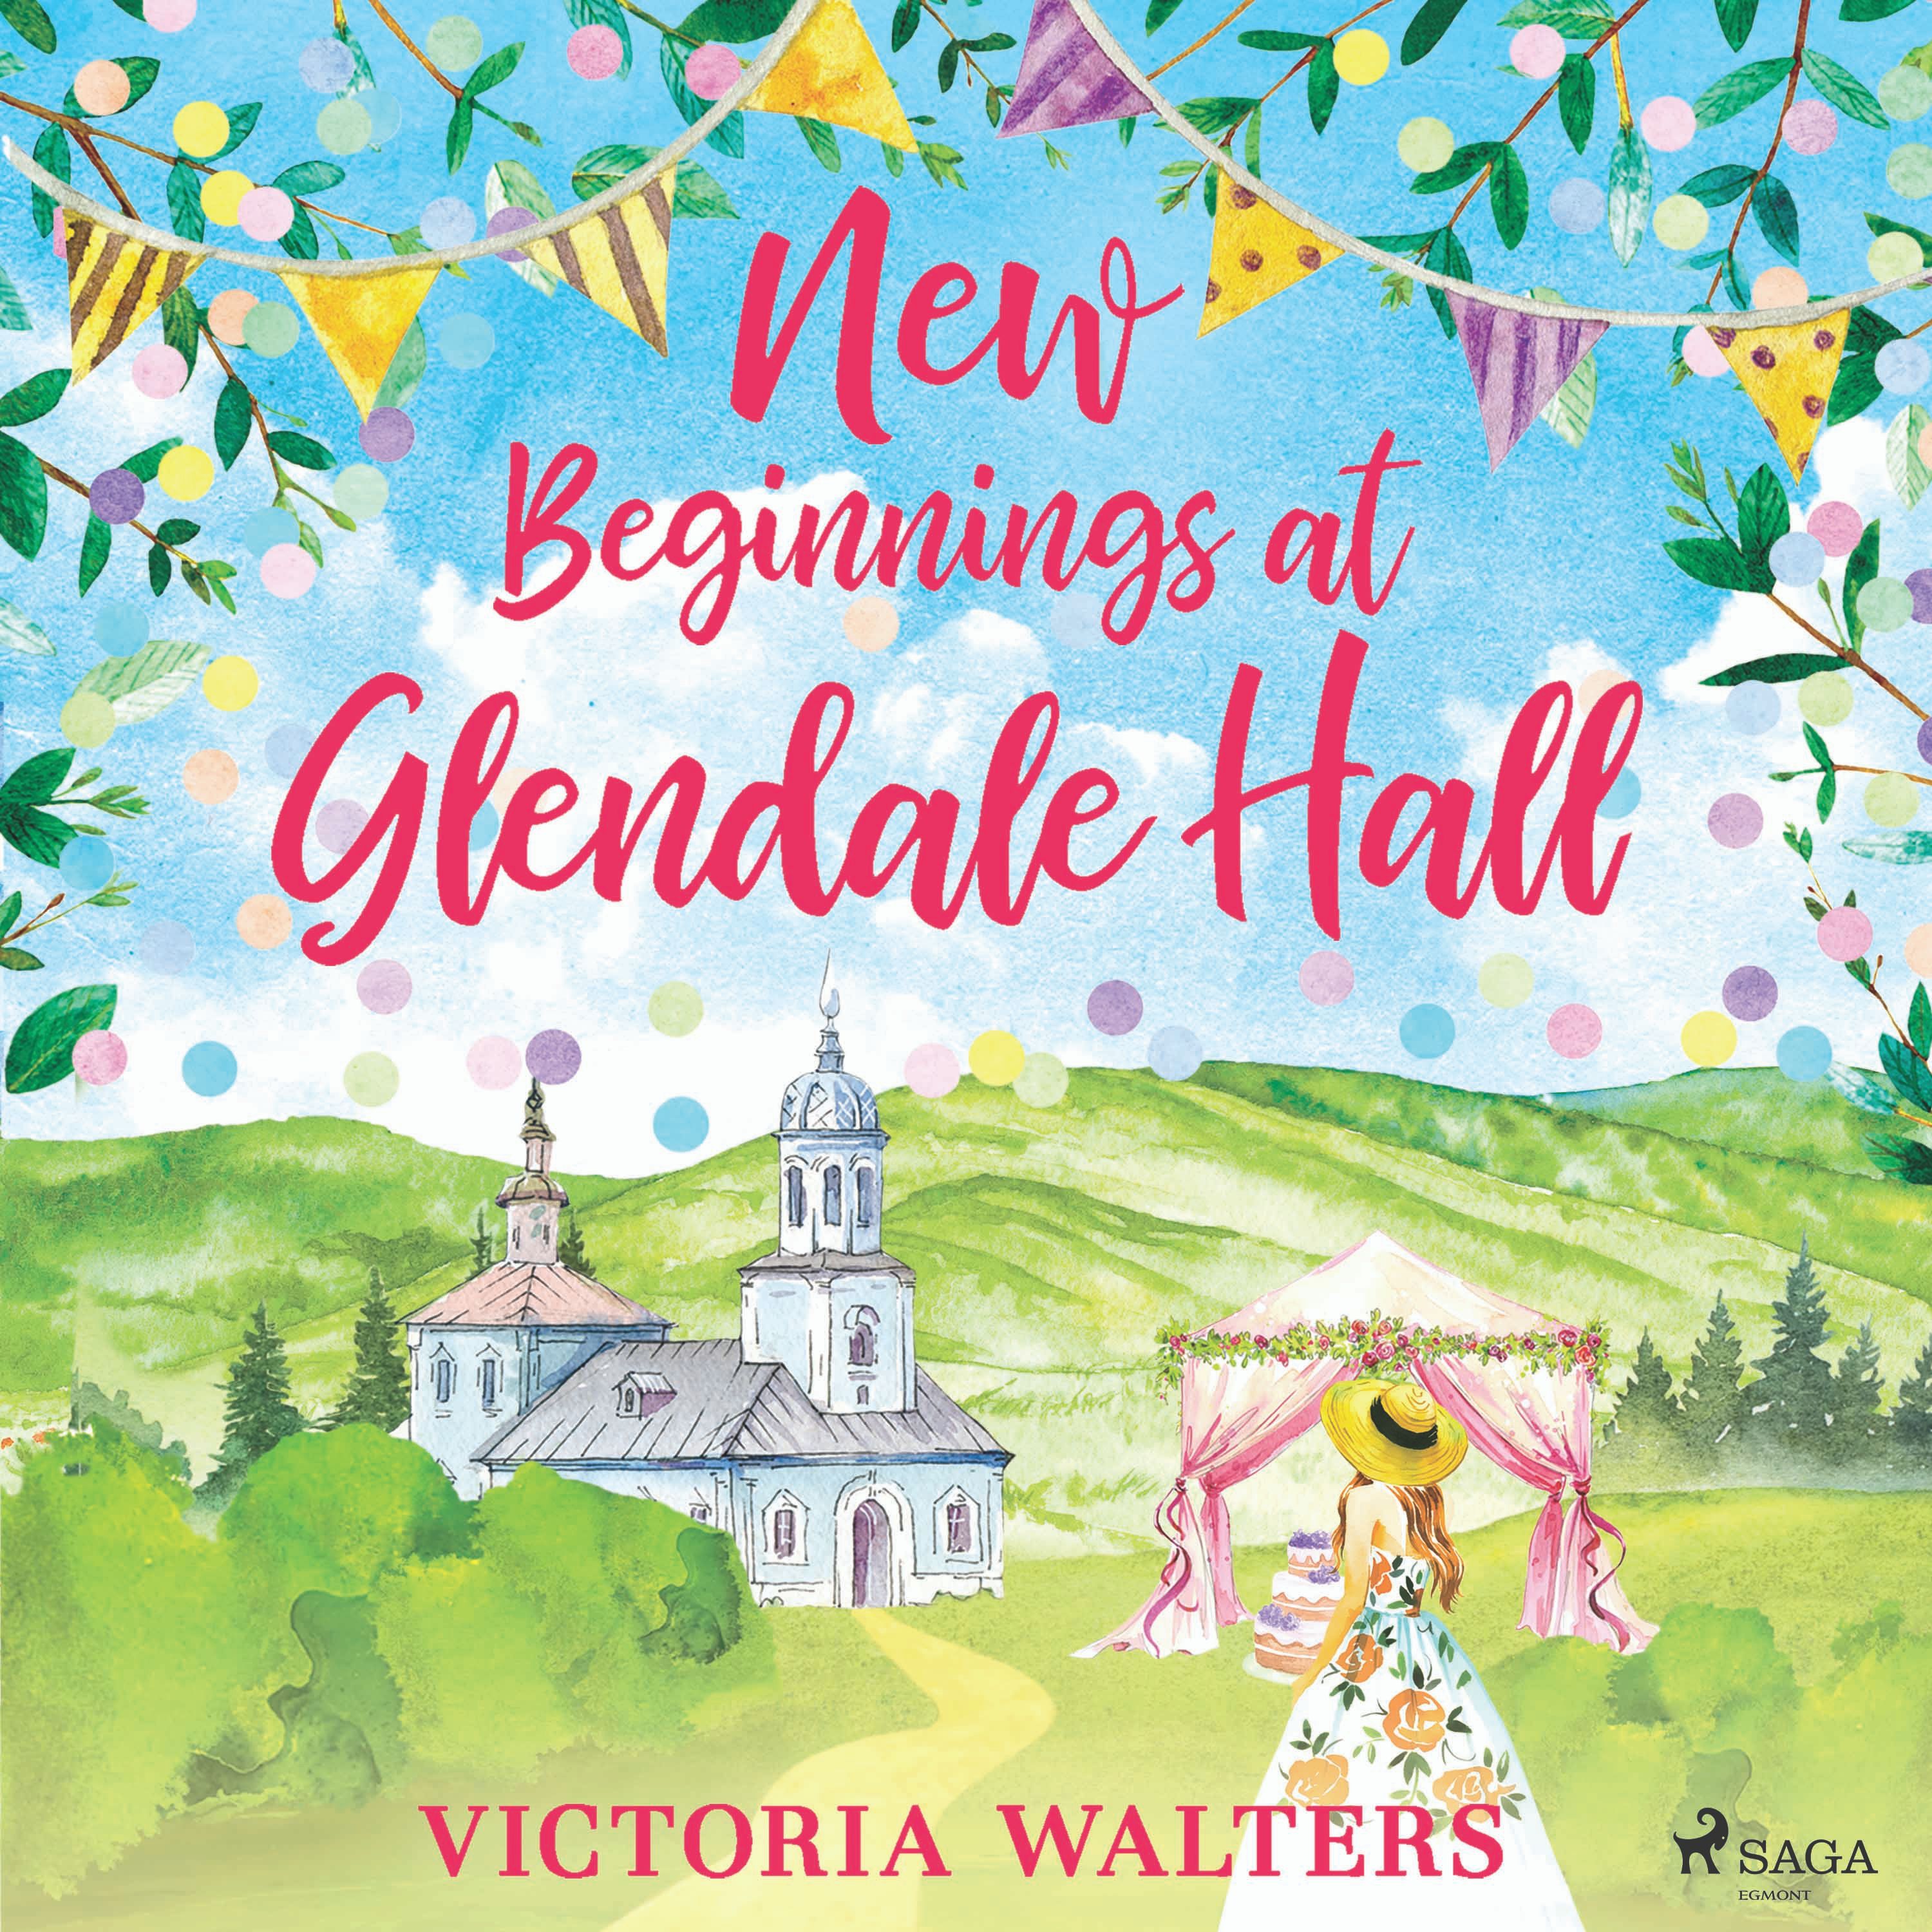 New Beginnings at Glendale Hall, lydbog af Victoria Walters